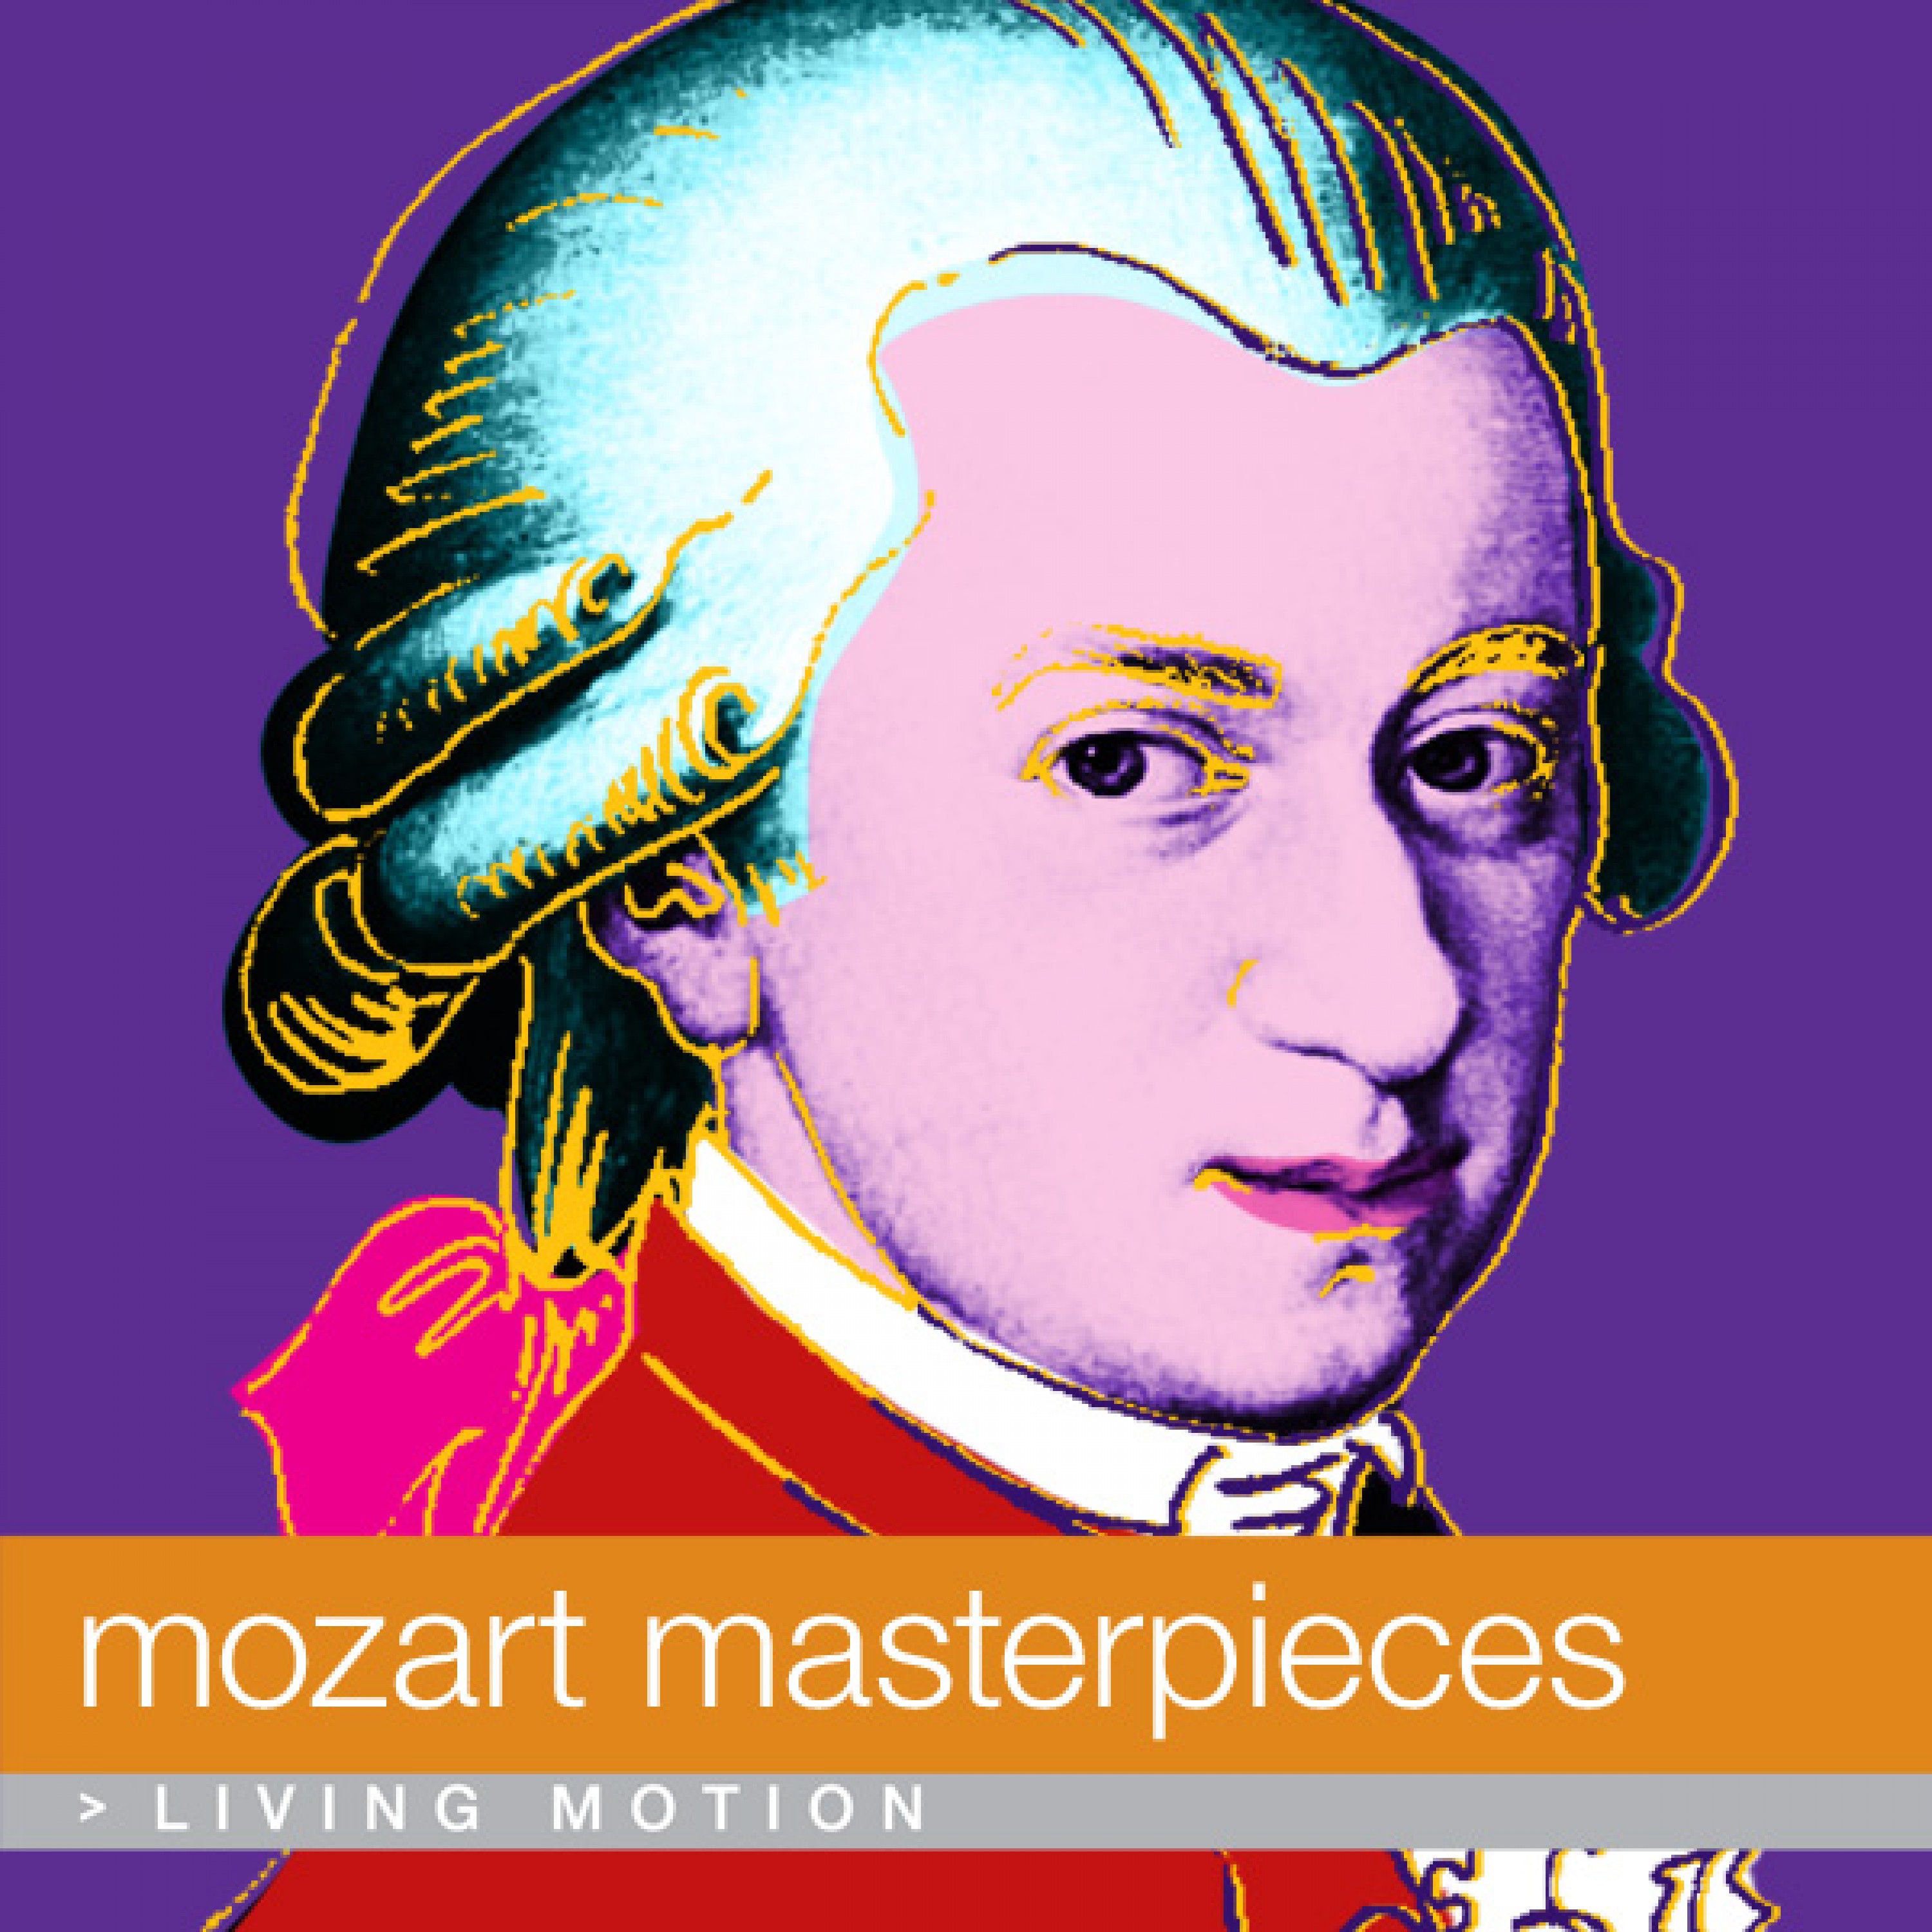 Mozart: Masterpieces (Classical Music, Symphony No. 40, Don Giovanni, Rondo Alla Turca, Divertimento, Lullaby, Piano Pieces), Living Motion